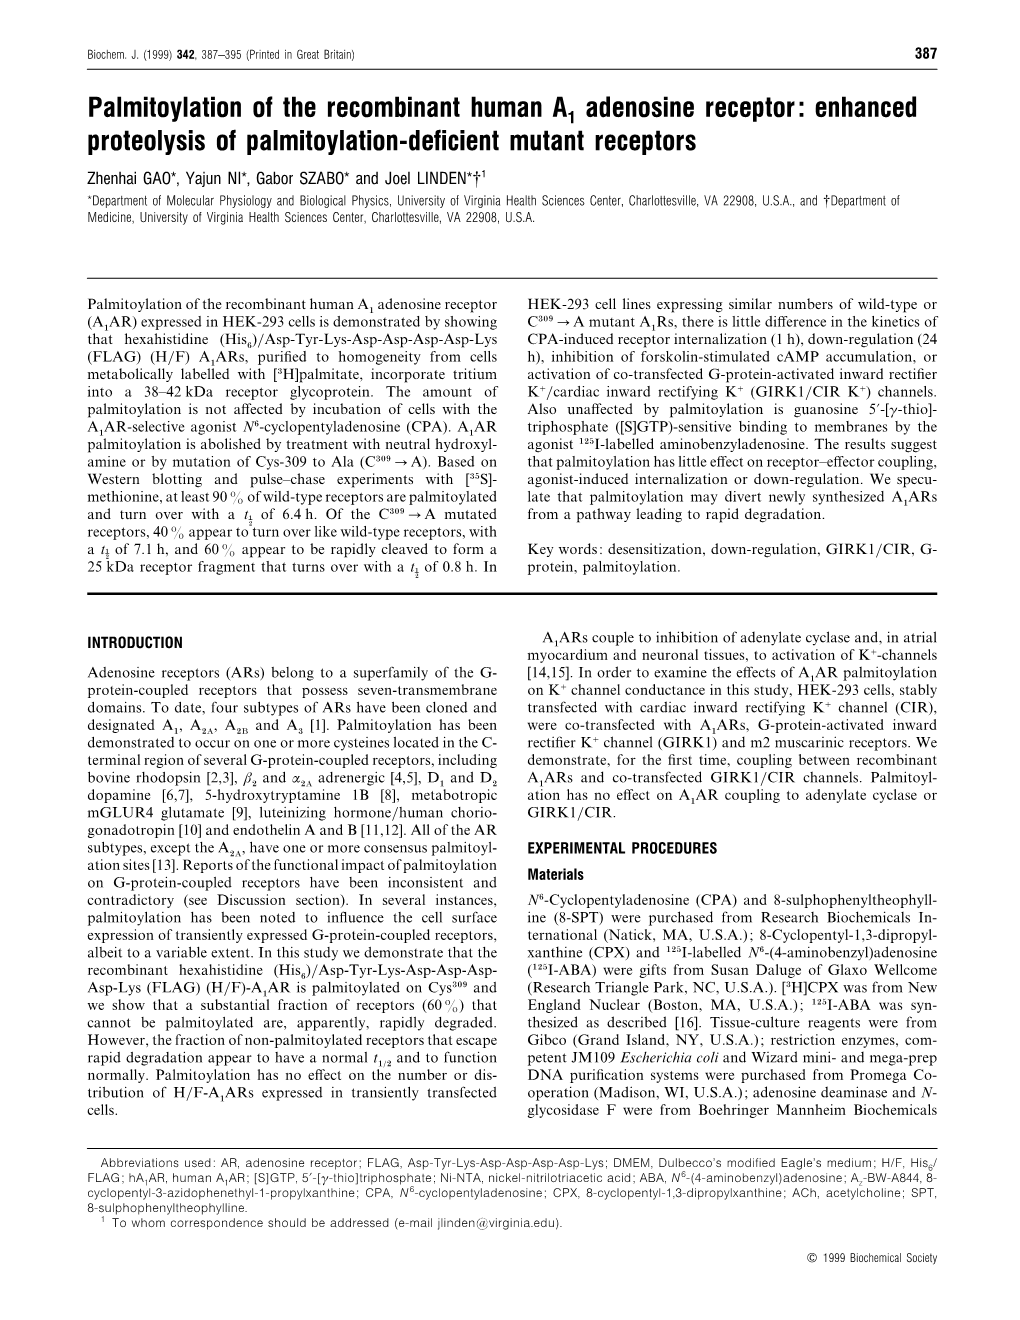 Palmitoylation of the Recombinant Human A1 Adenosine Receptor